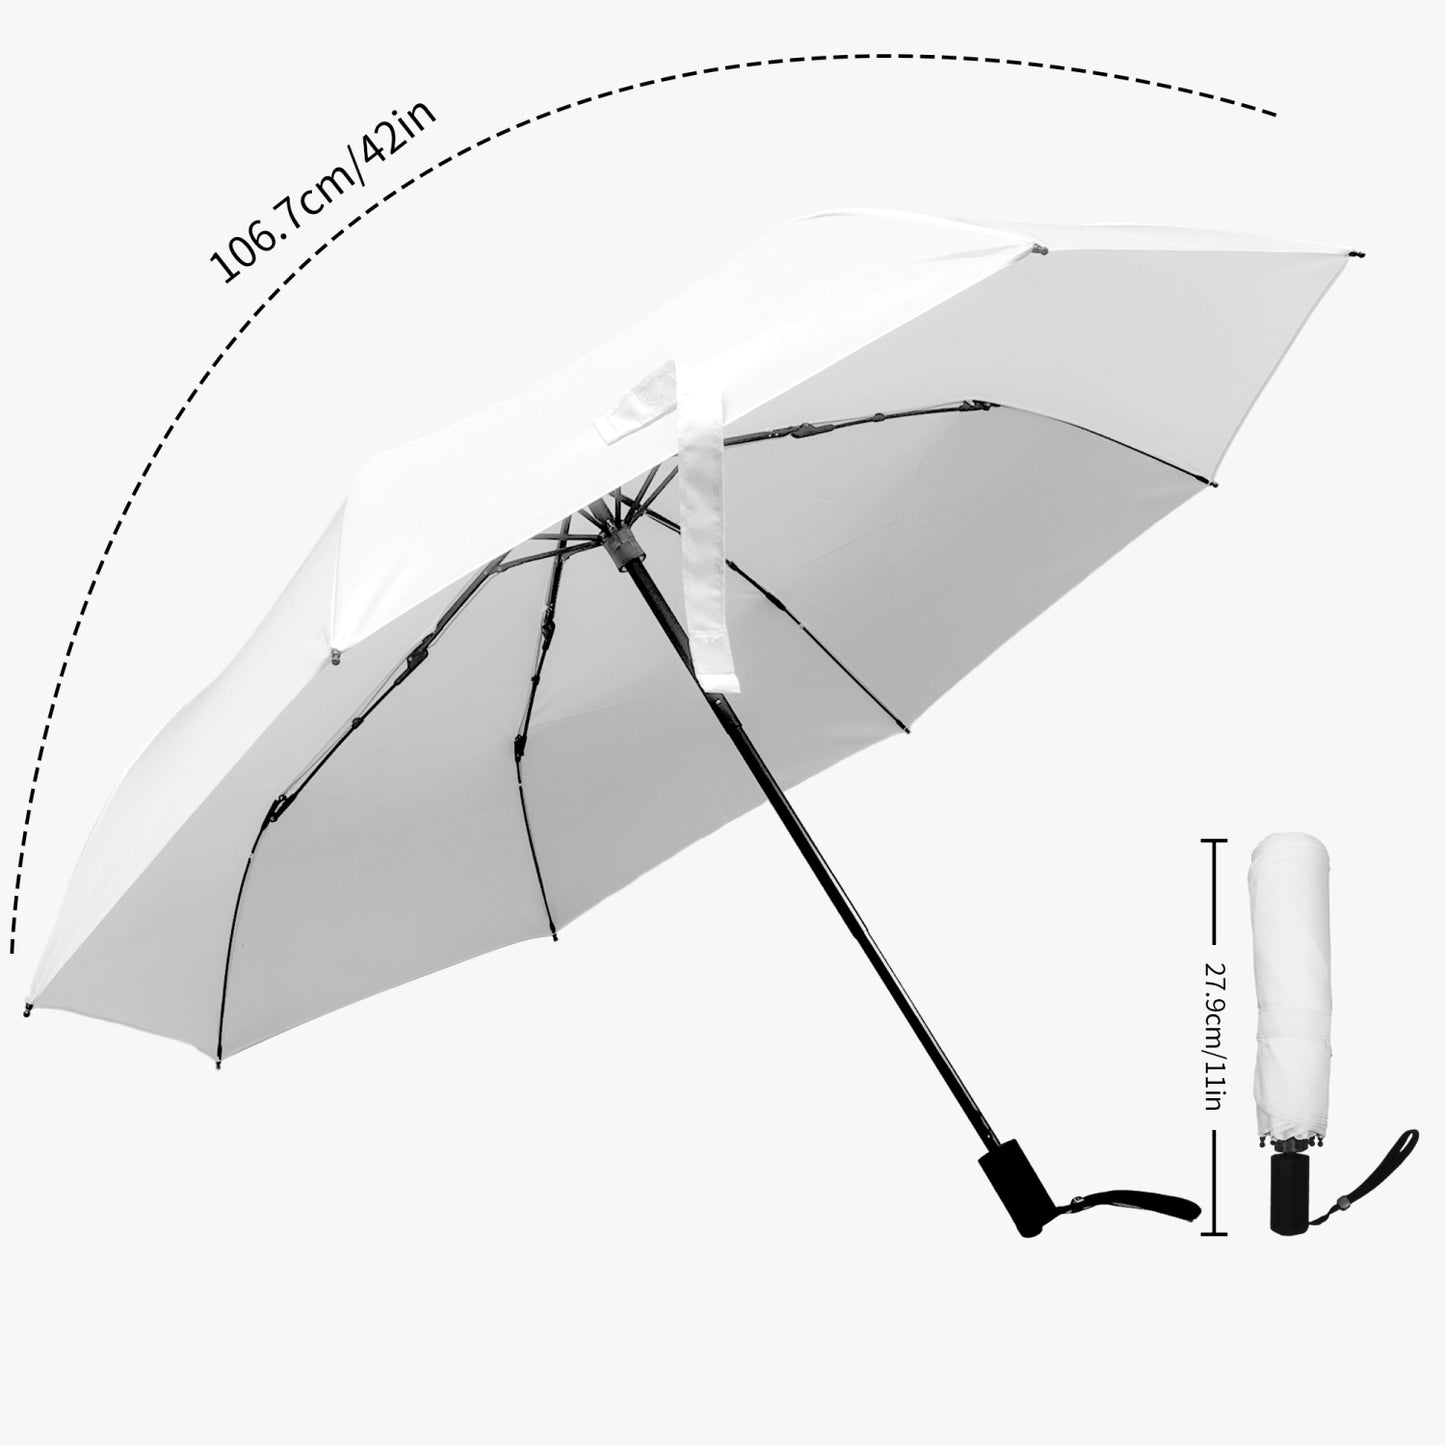 PENINSULAR HOT SPRINGS folding Automatic Iron and vinyl umbrella